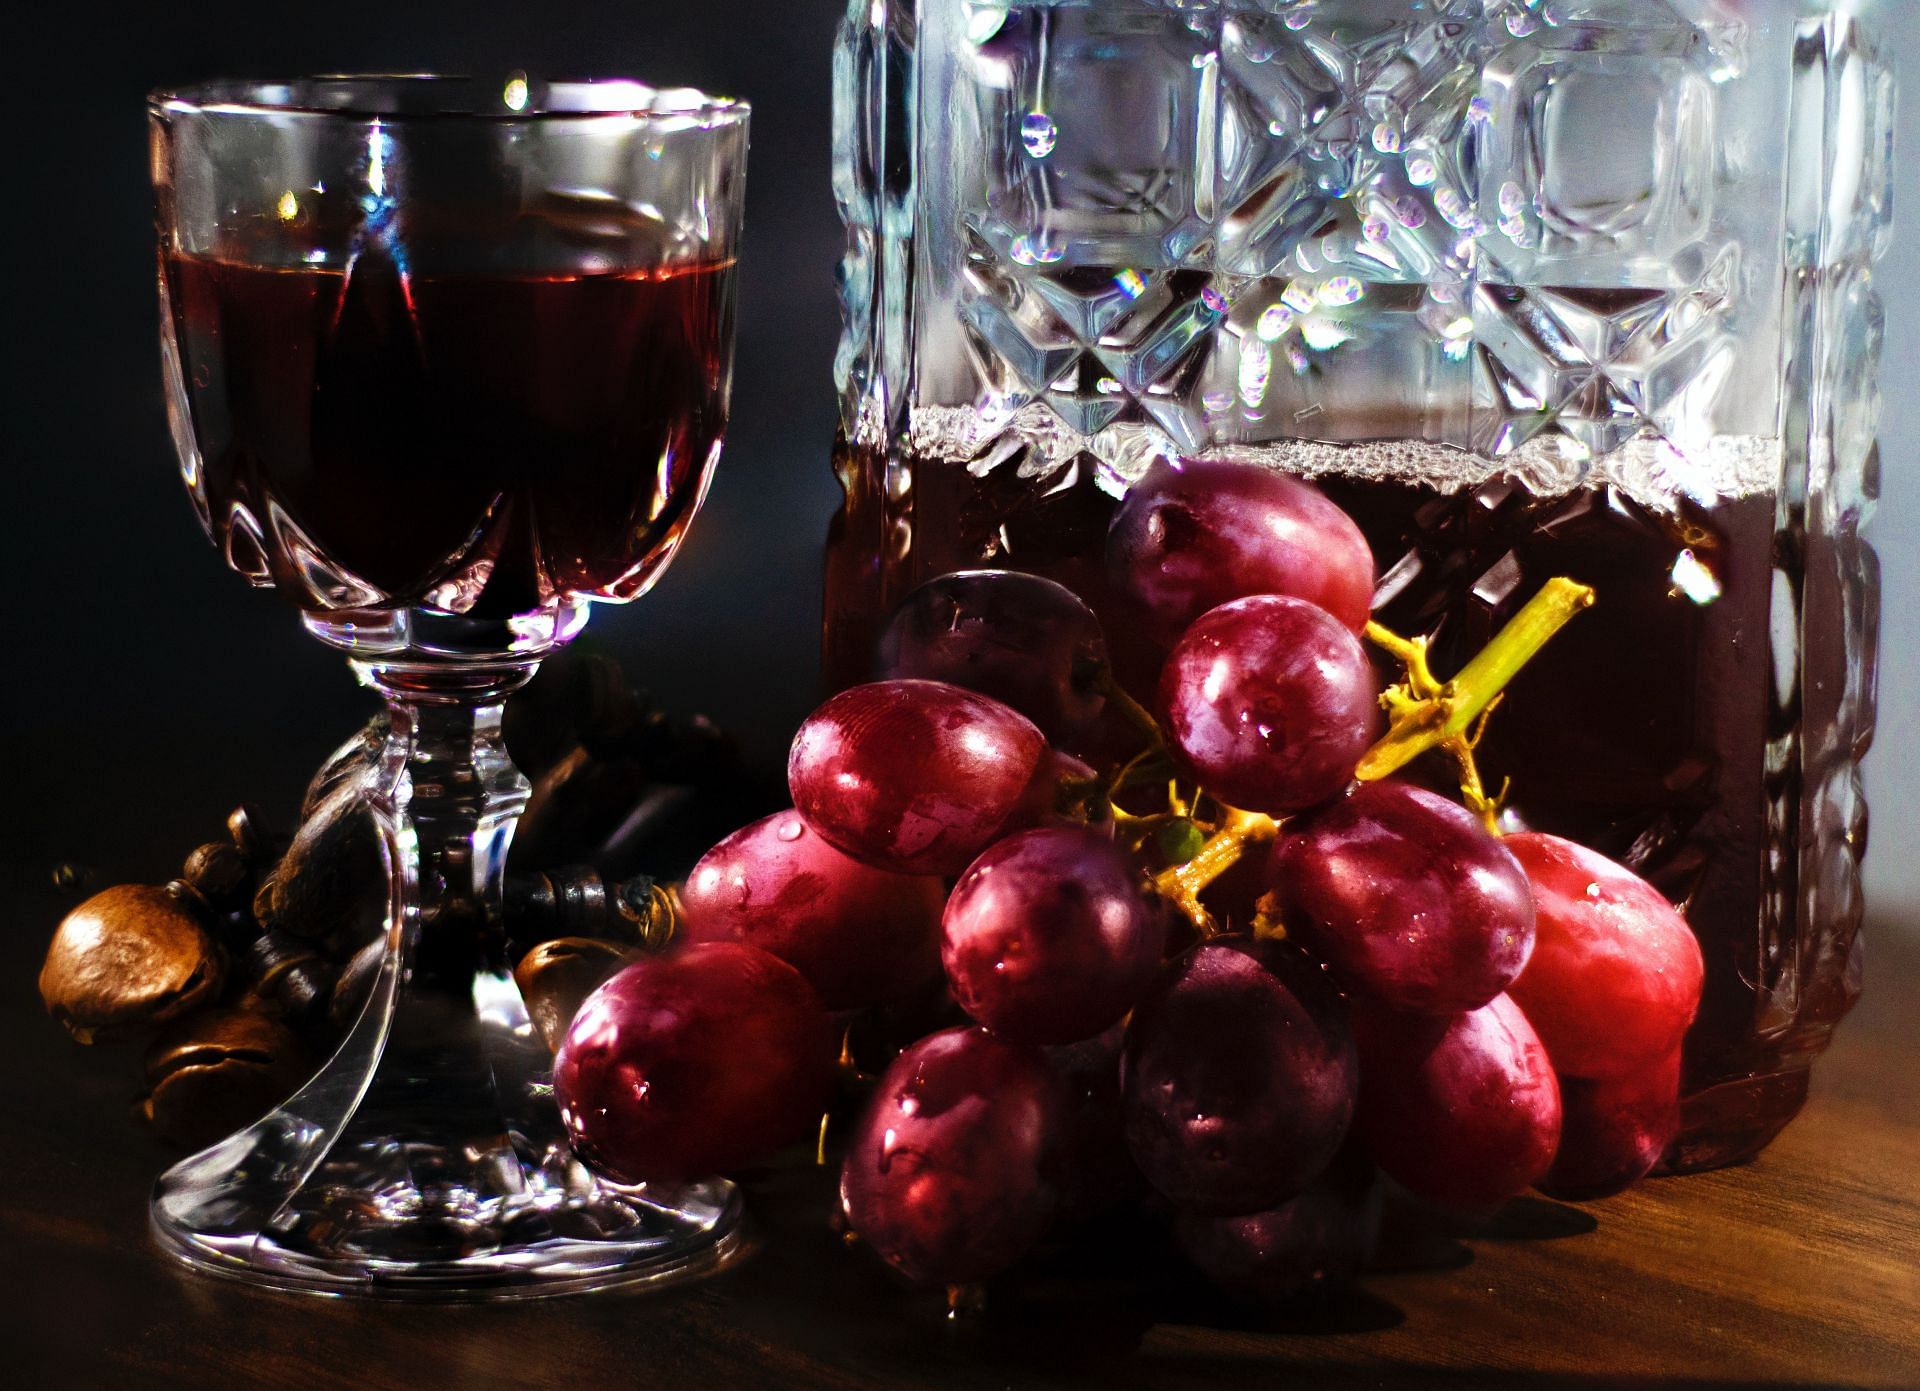 Red grapes are used to make wine. (Image via Unsplash/Callum Hill)